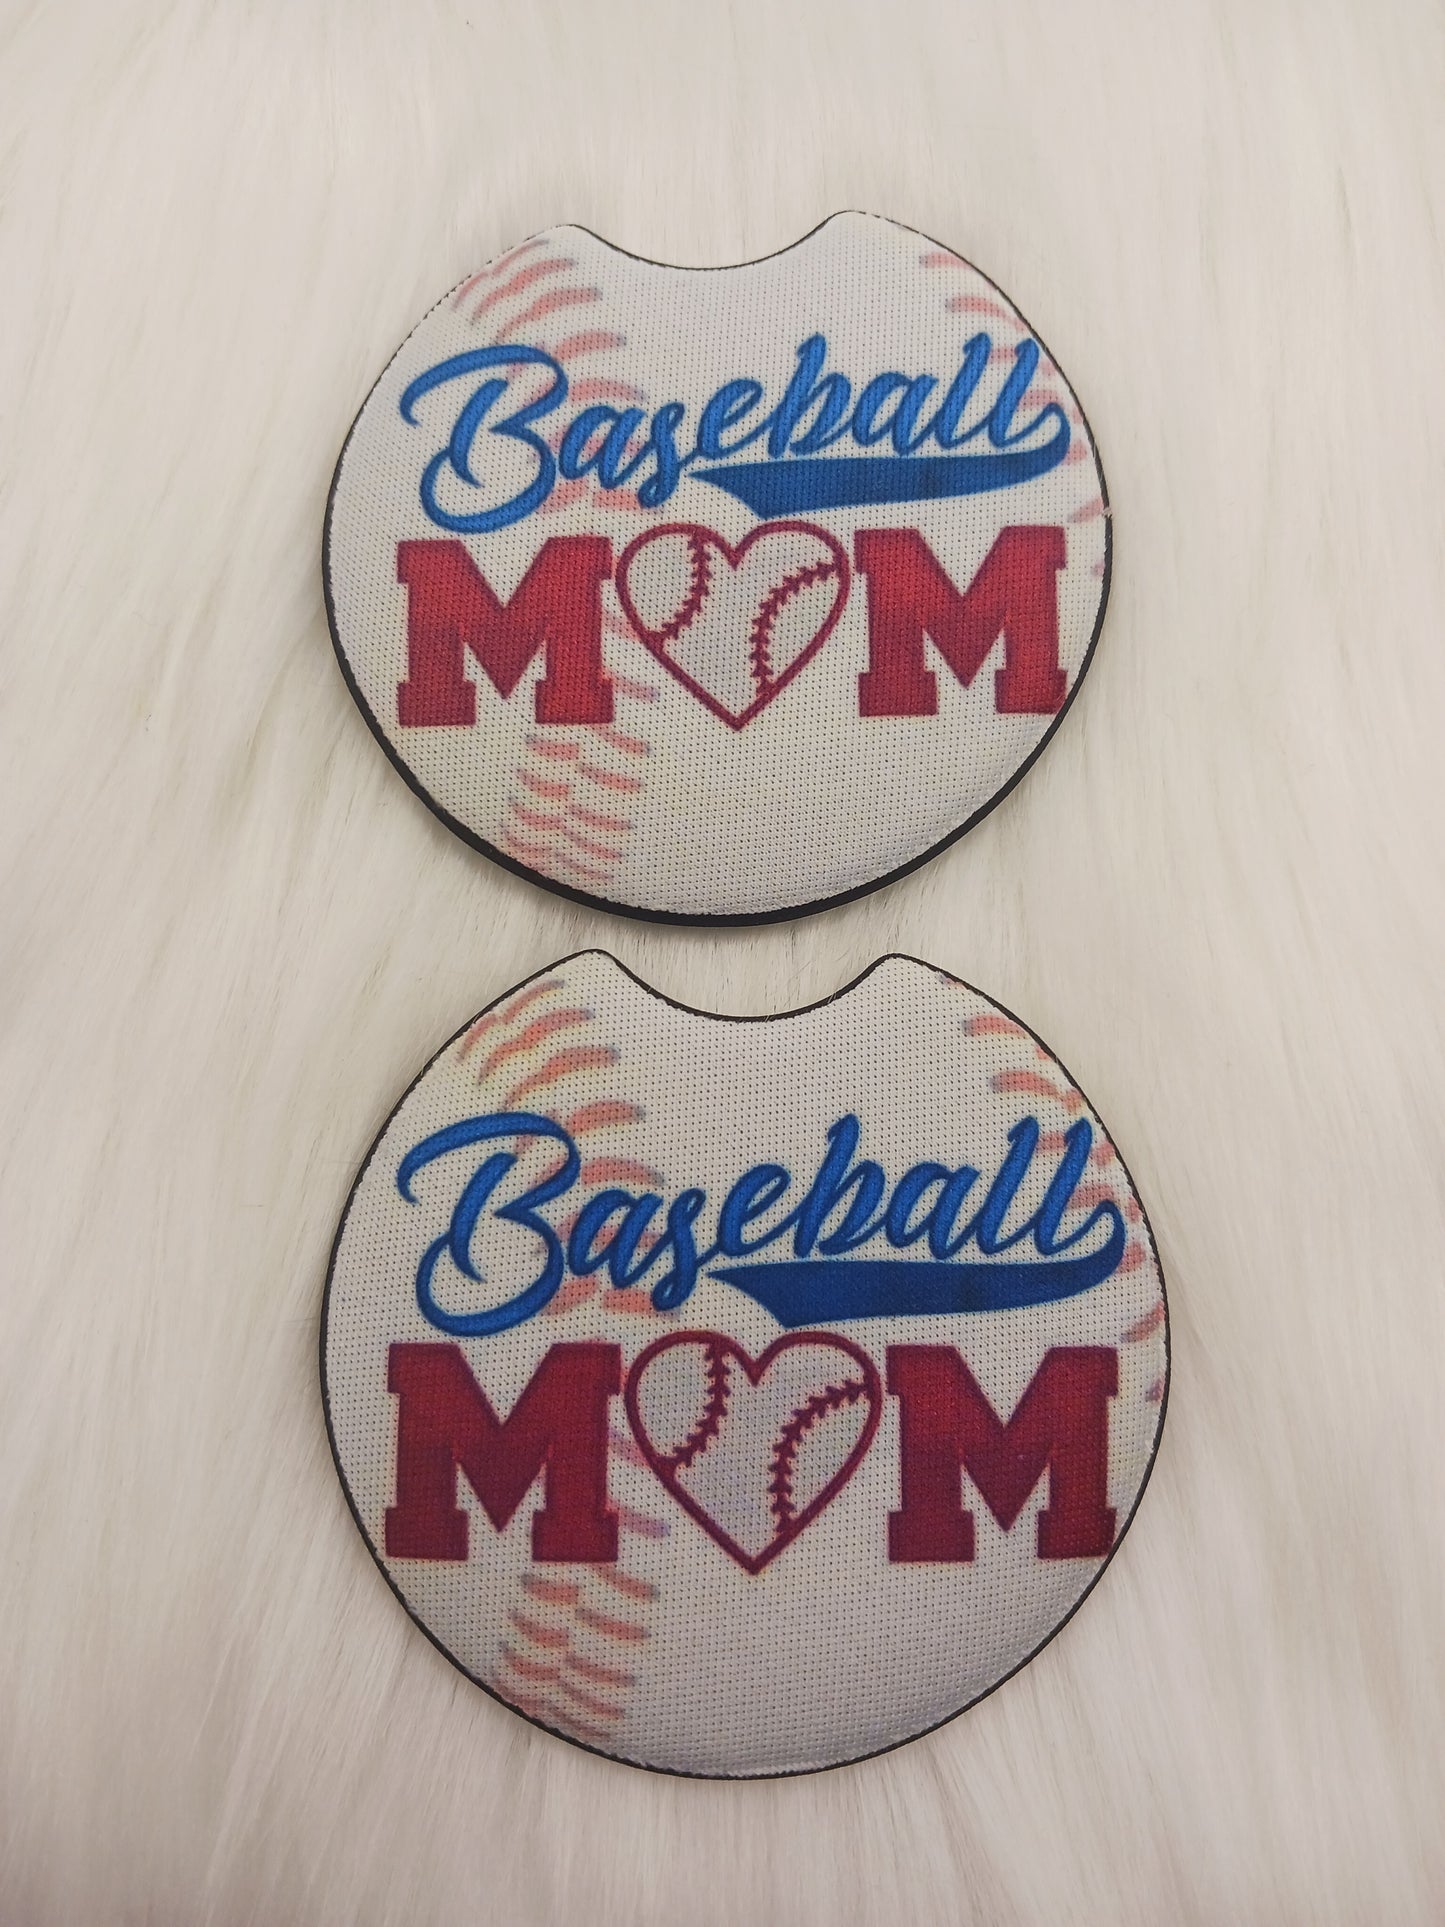 Baseball mom car coasters